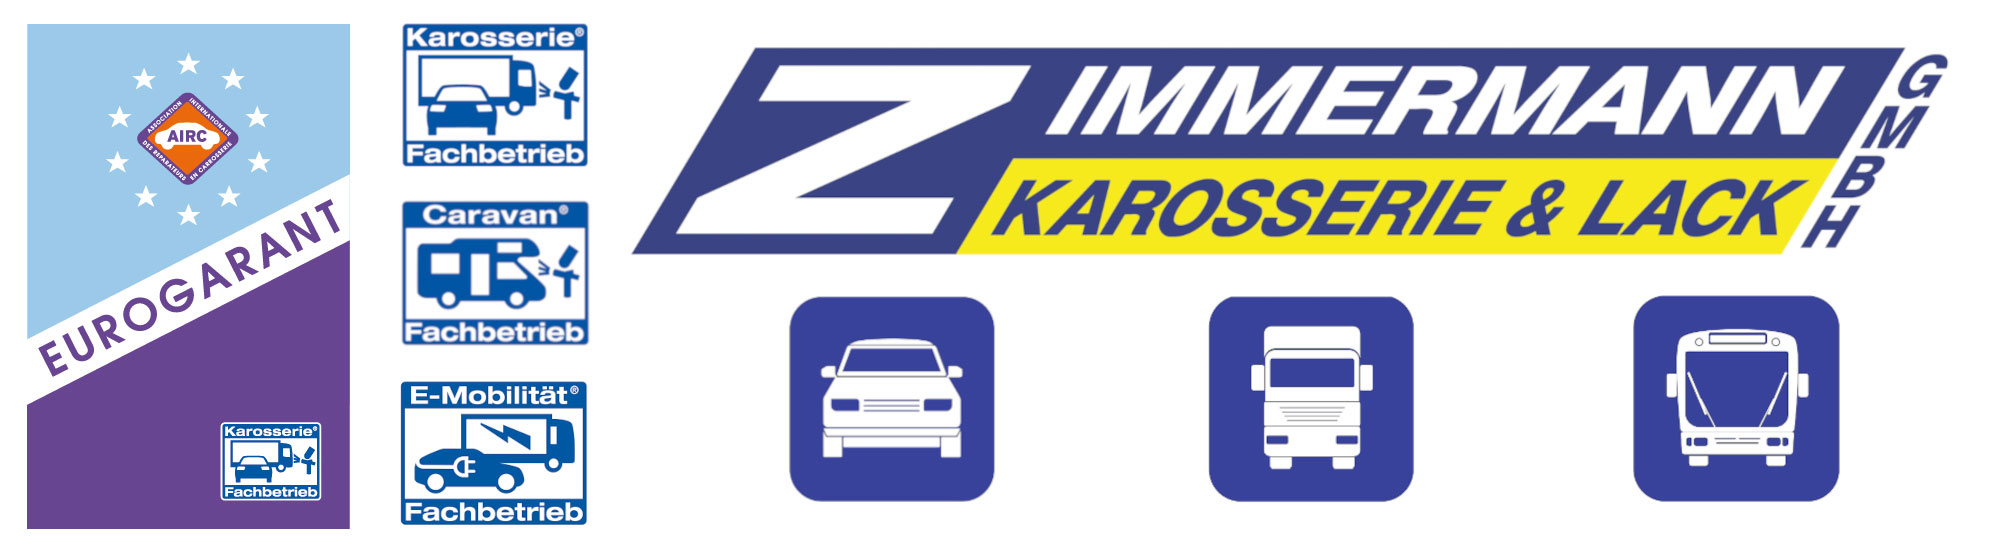 Zimmermann Karosserie & Lack GmbH